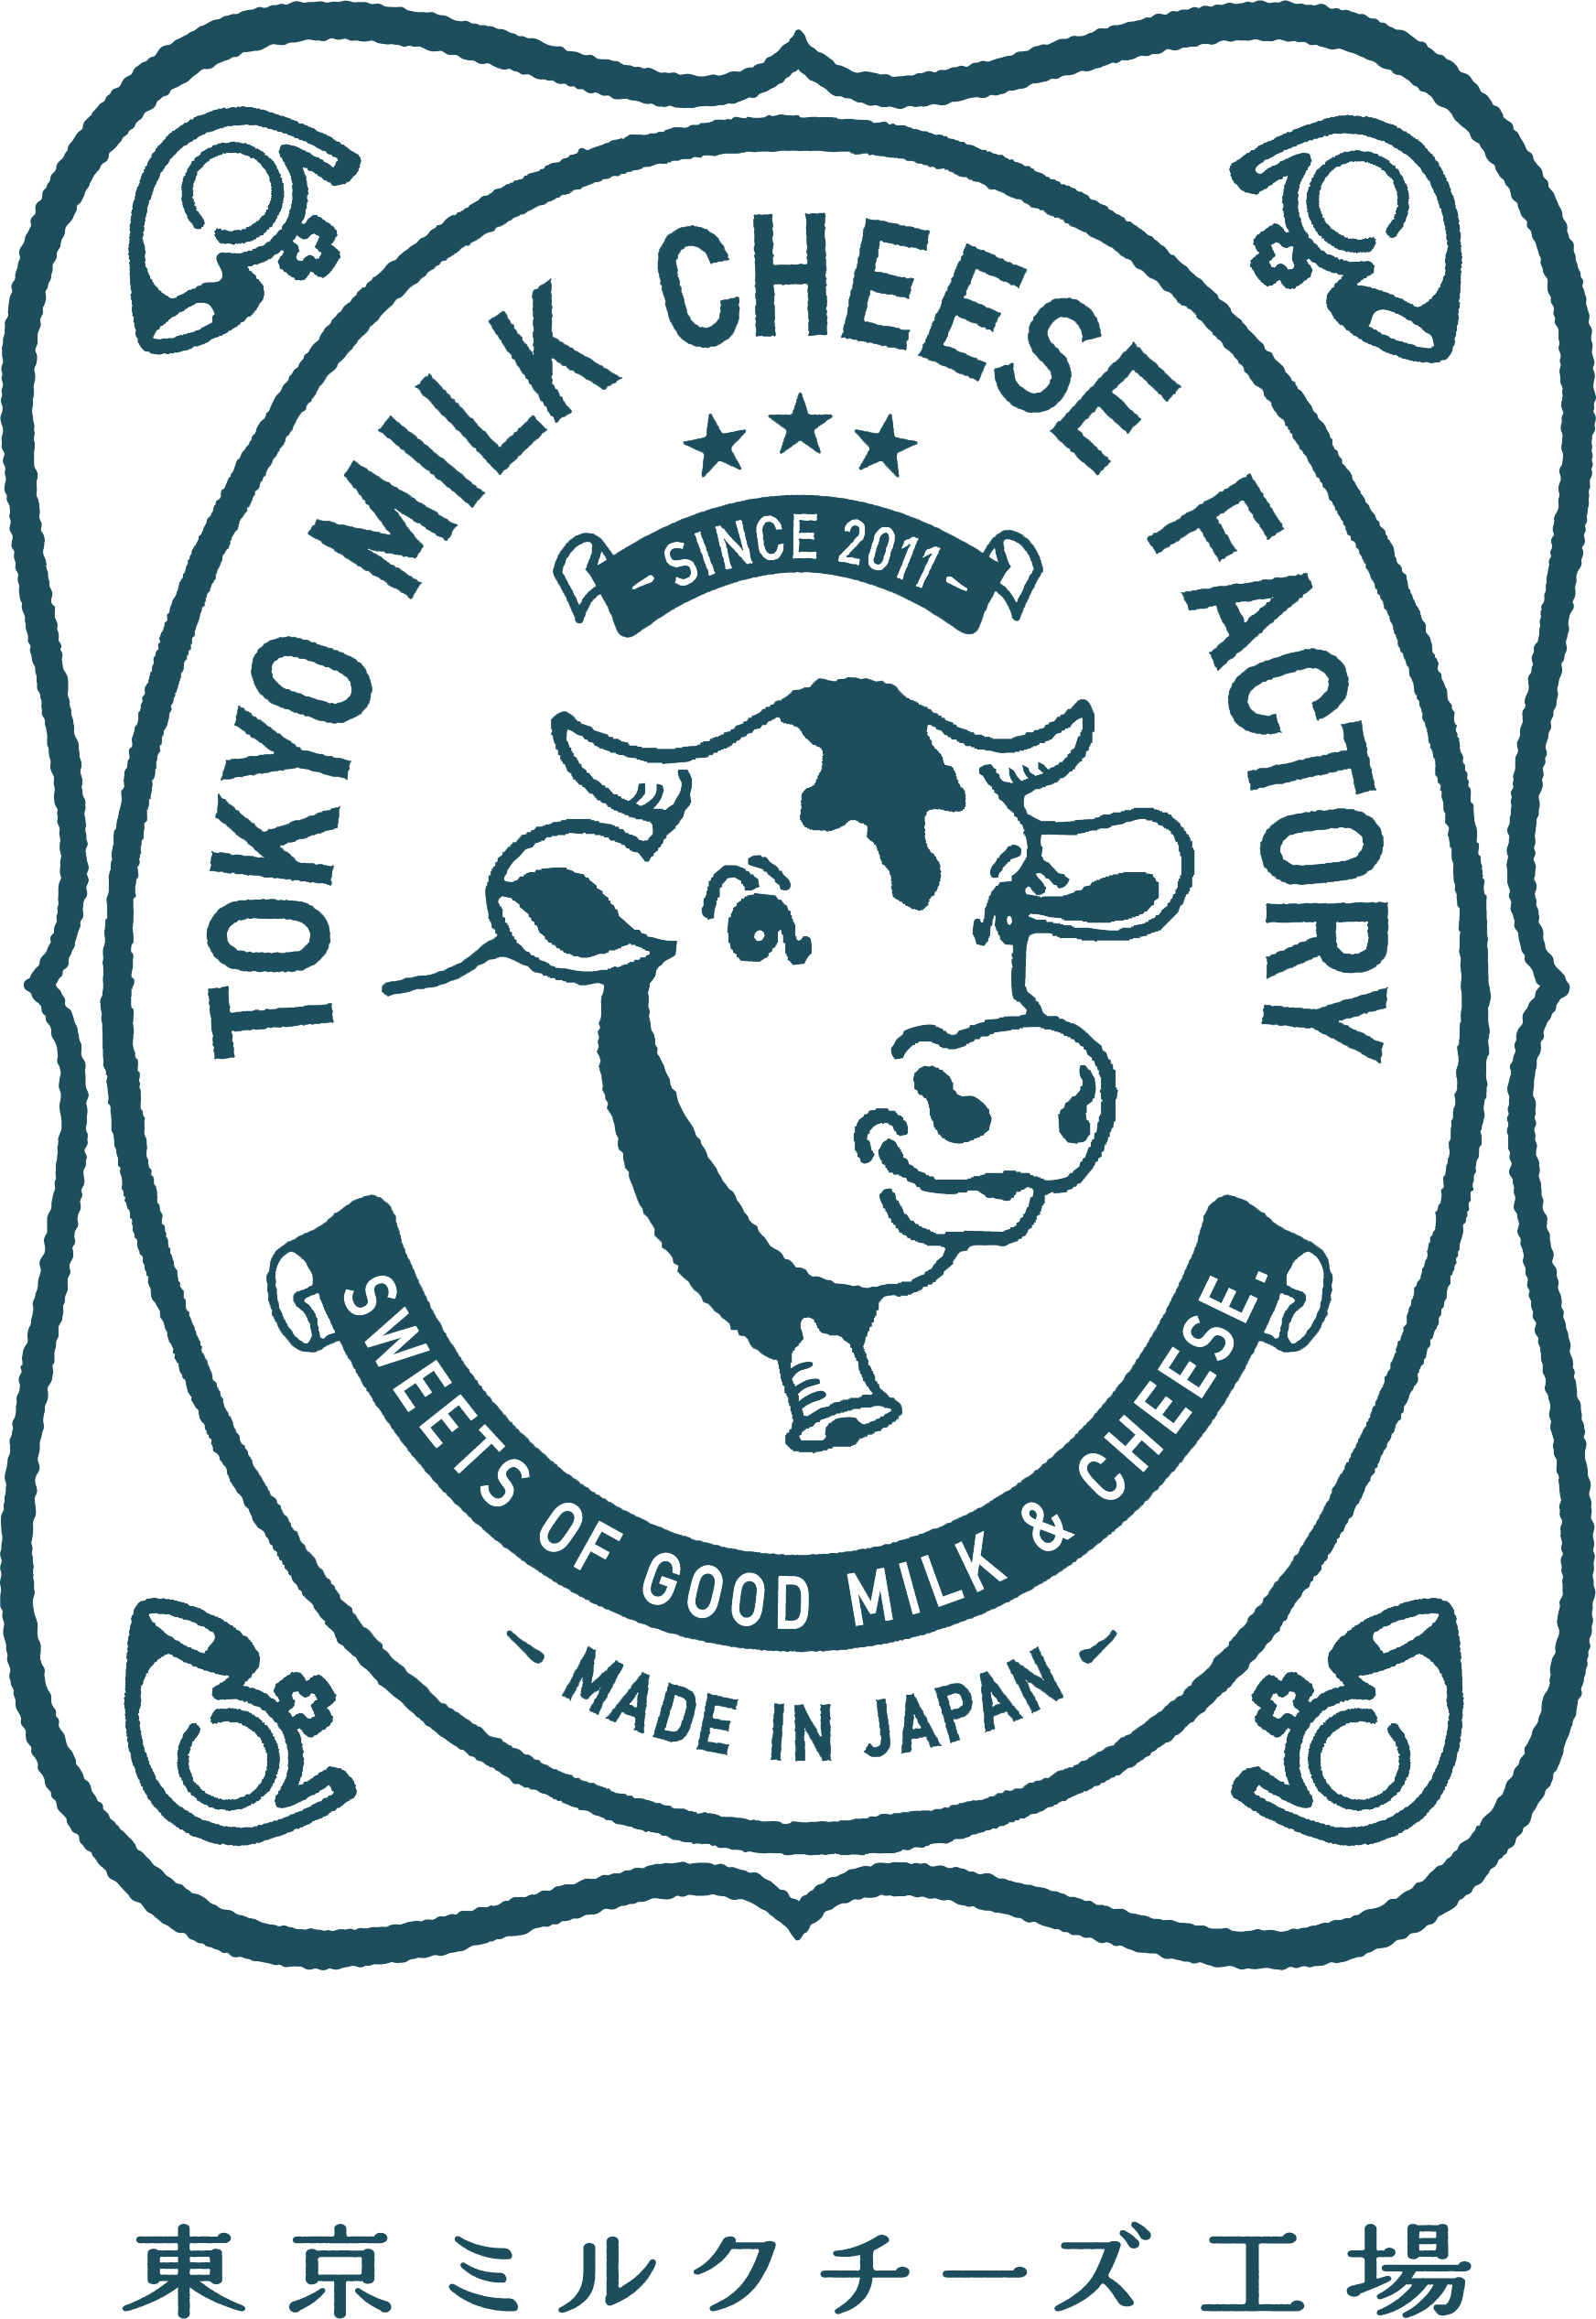 Tokyo Milk Cheese Factory SG